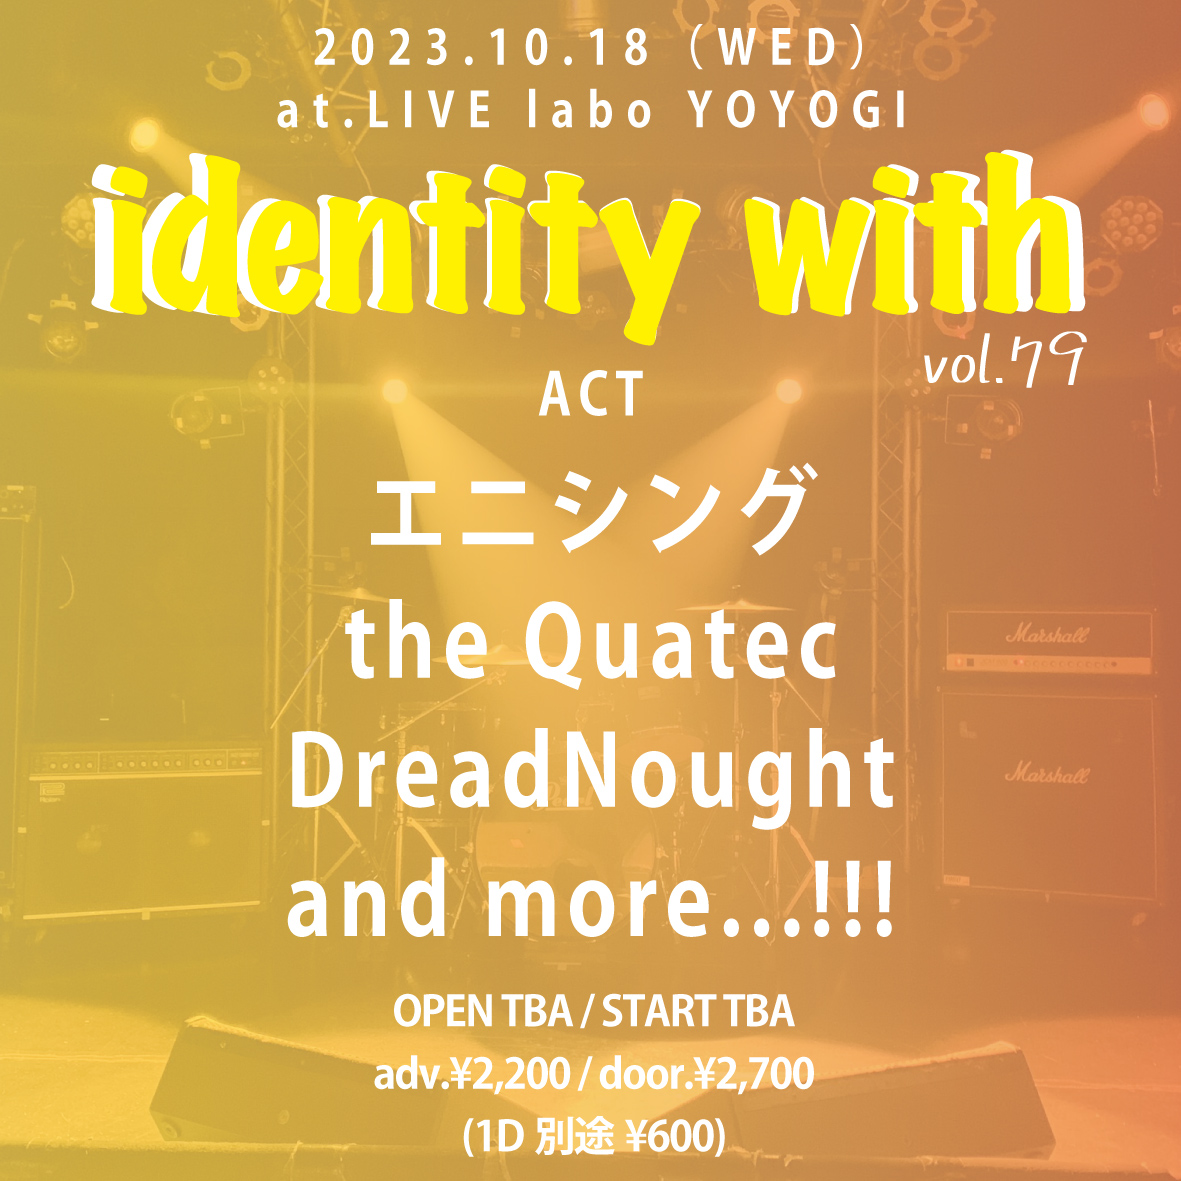 identity with vol.79